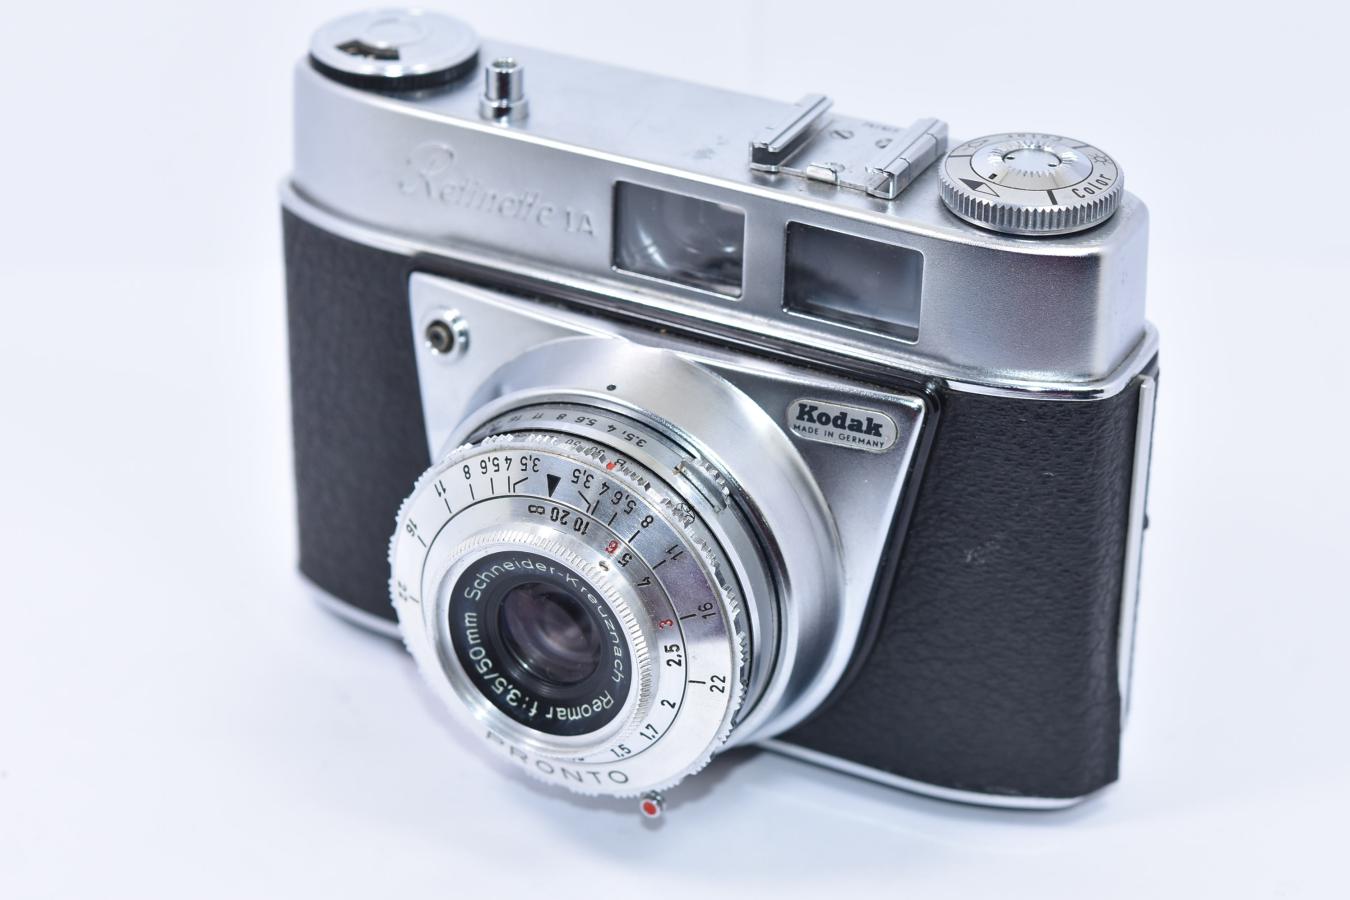 【B級特価品】Kodak Retinette IA 【Schneider-Kreuznach Renomar 50/3.5 レンズ搭載】